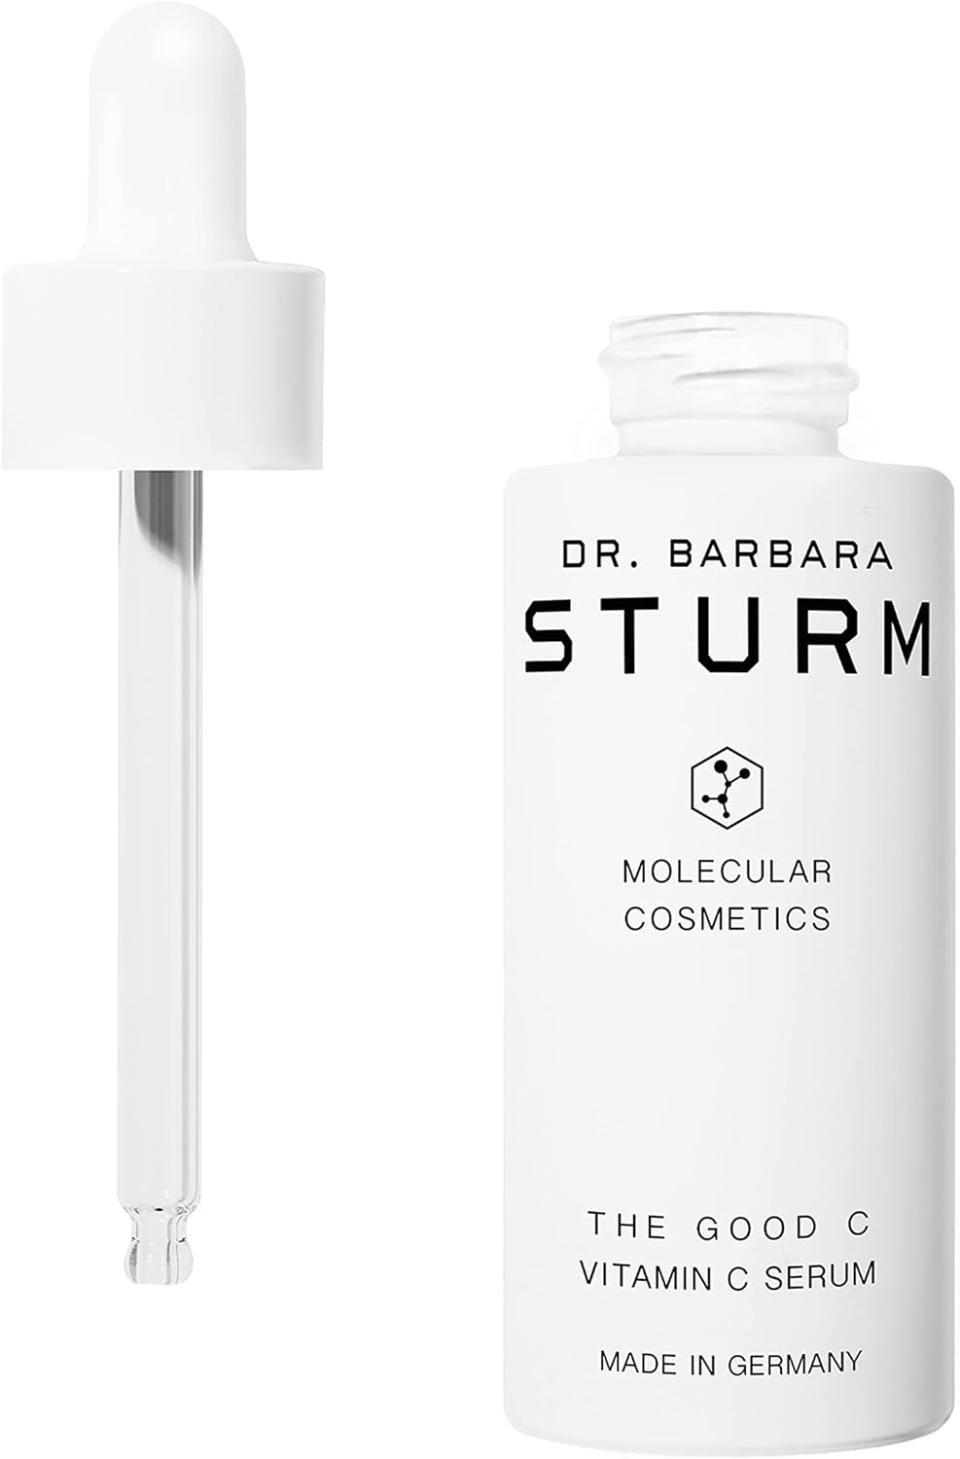 Dr. Barbara Sturm
The Good Vitamin C Serum